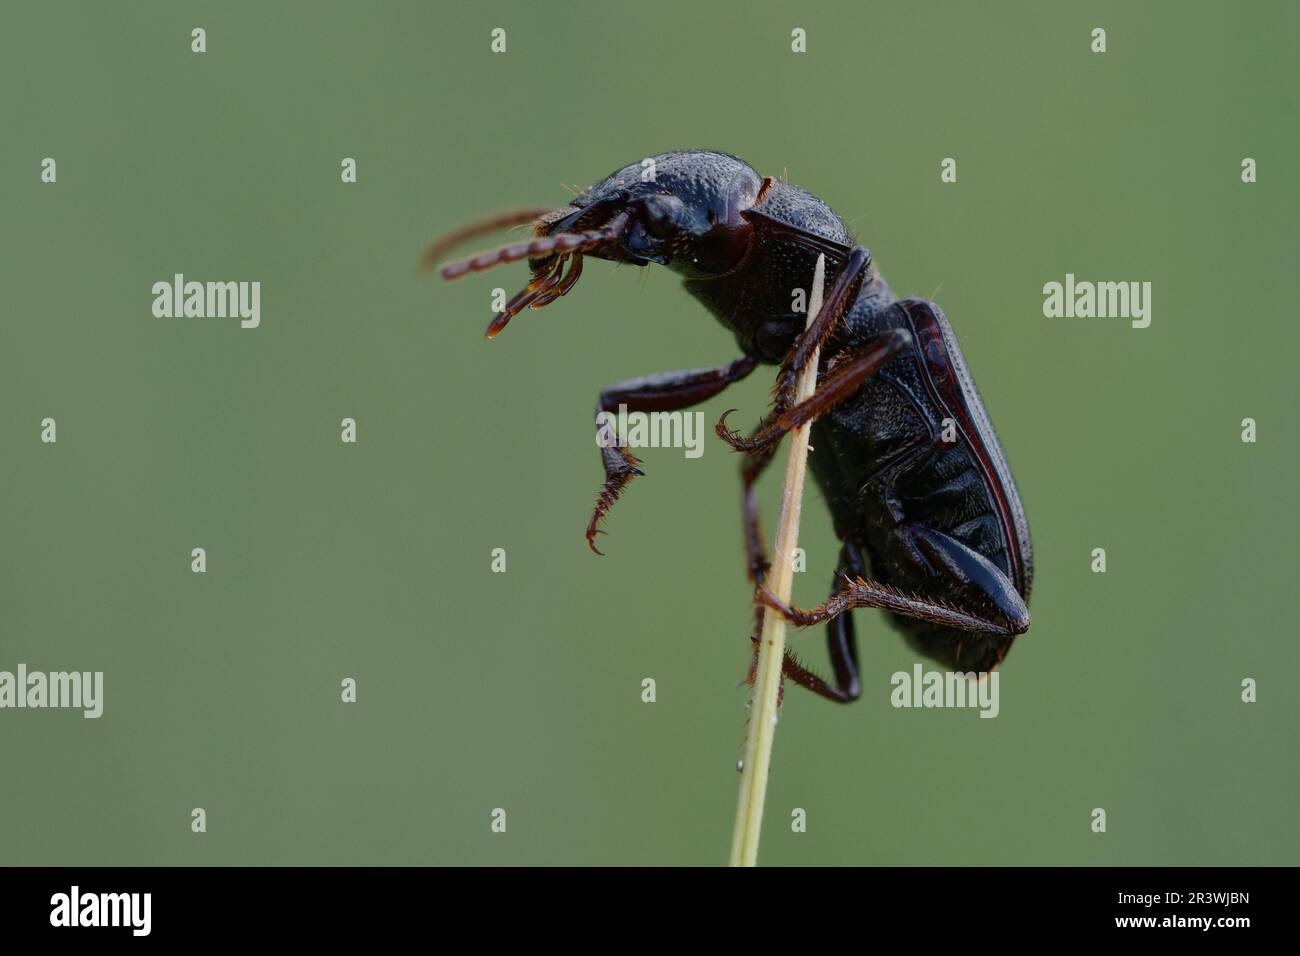 Beetle (Dixus sp.) on a plant stem Stock Photo